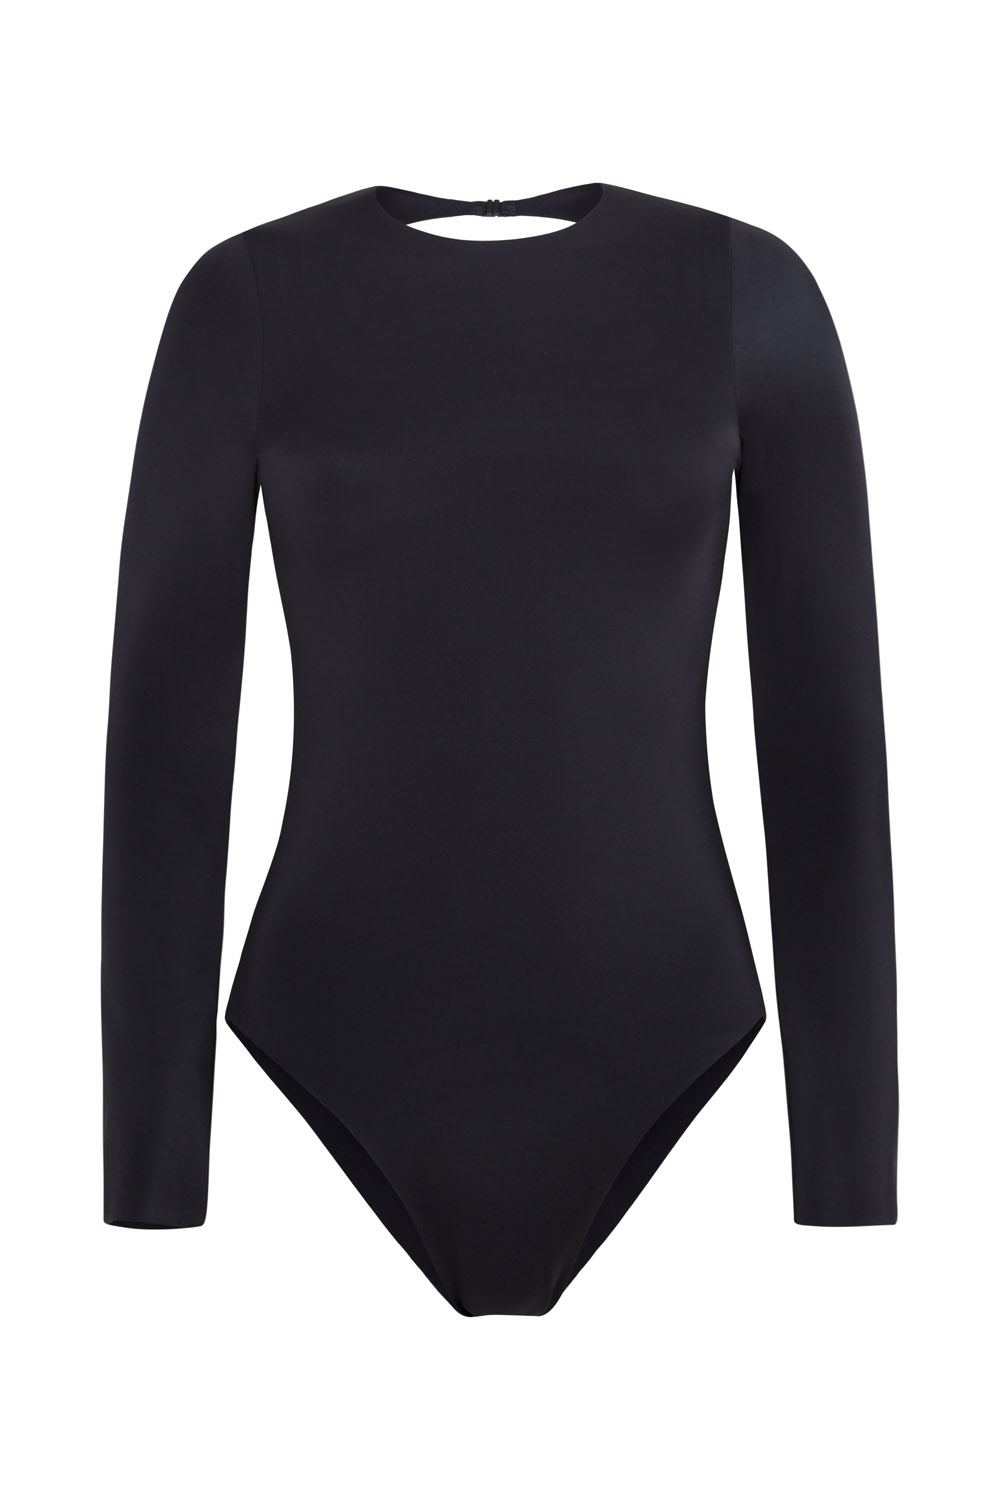 Sustainable Luxury Swimwear / Ropa de baño sostenible, eco bodysuit / bodysuit ecológico. Eugenie in blacksands, by NOW_THEN